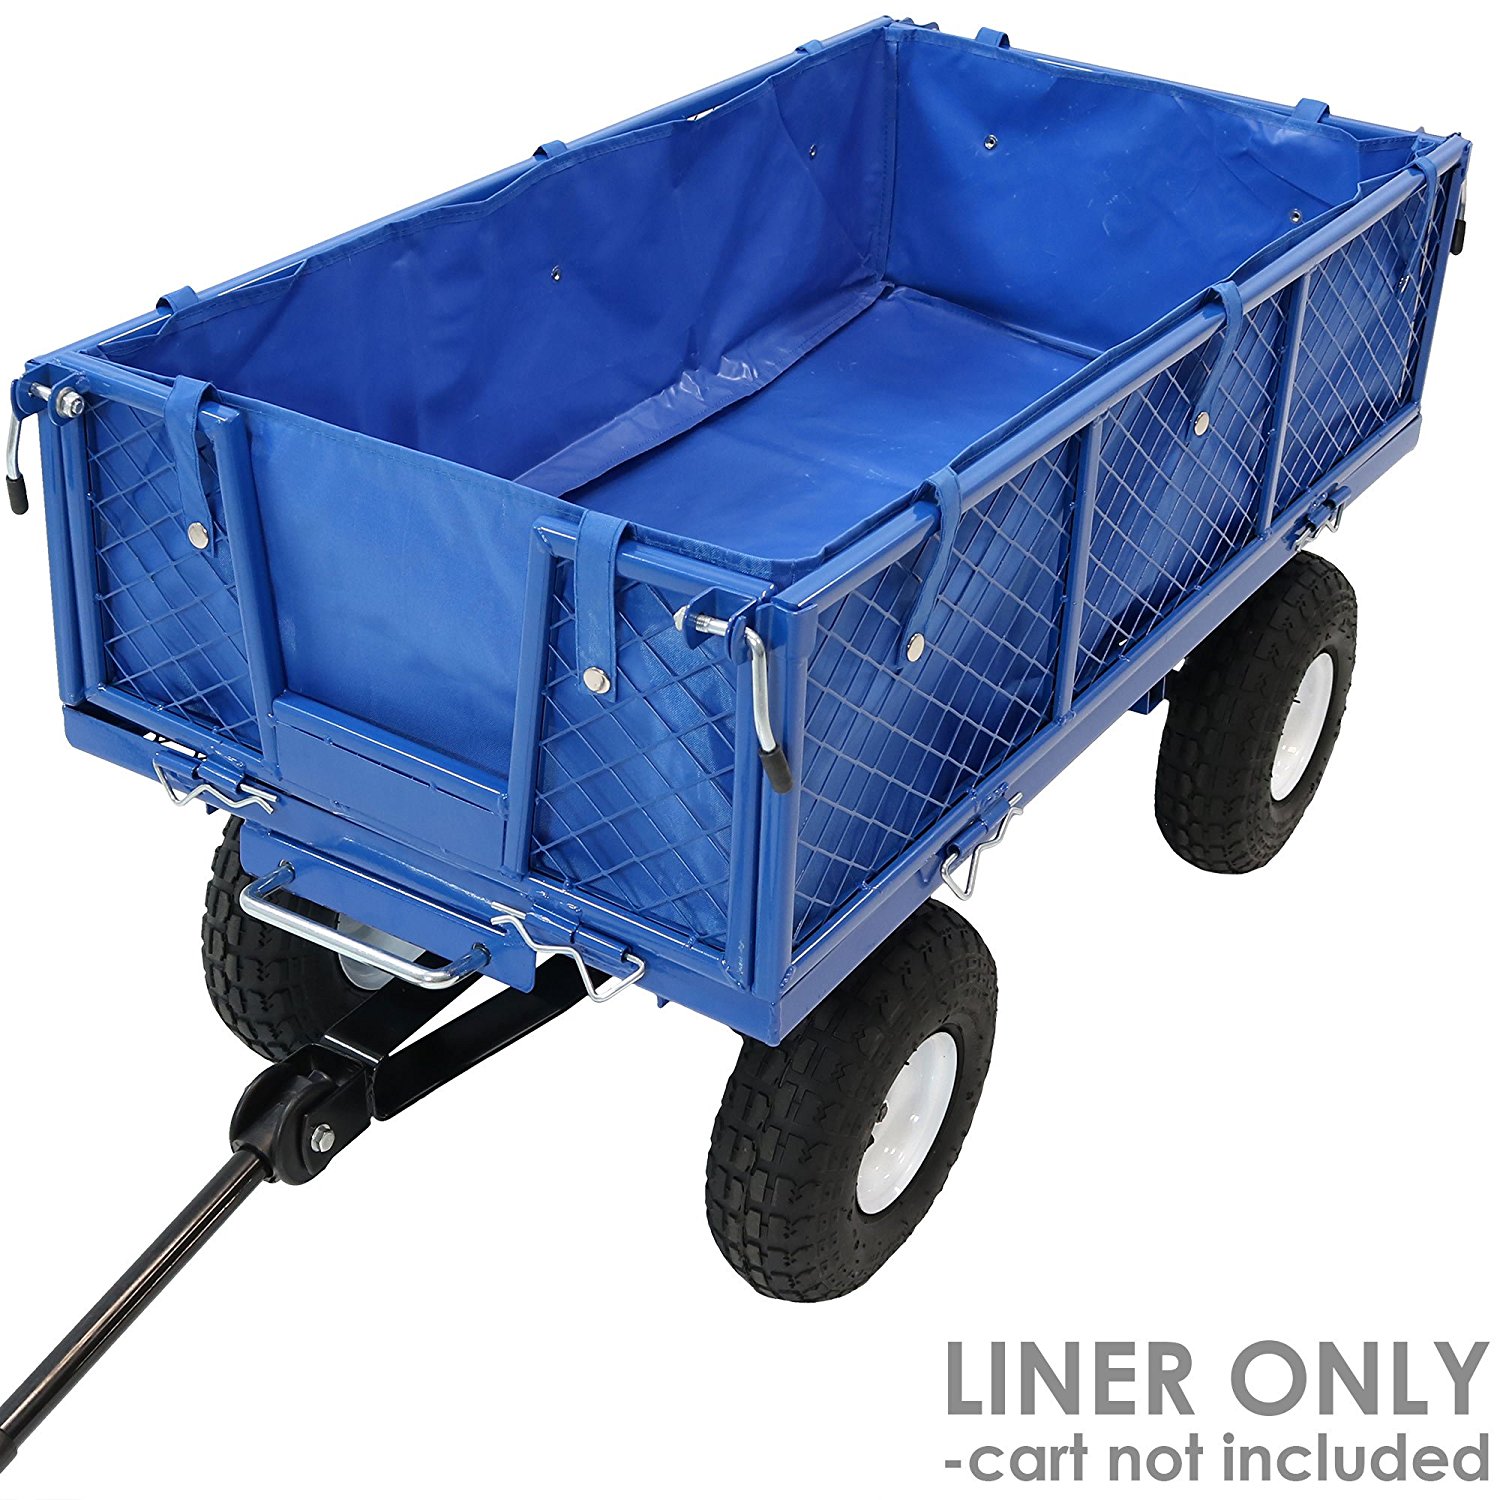 Sunnydaze Liner for Heavy Duty Dump Cart-Blue - Beach Wagons